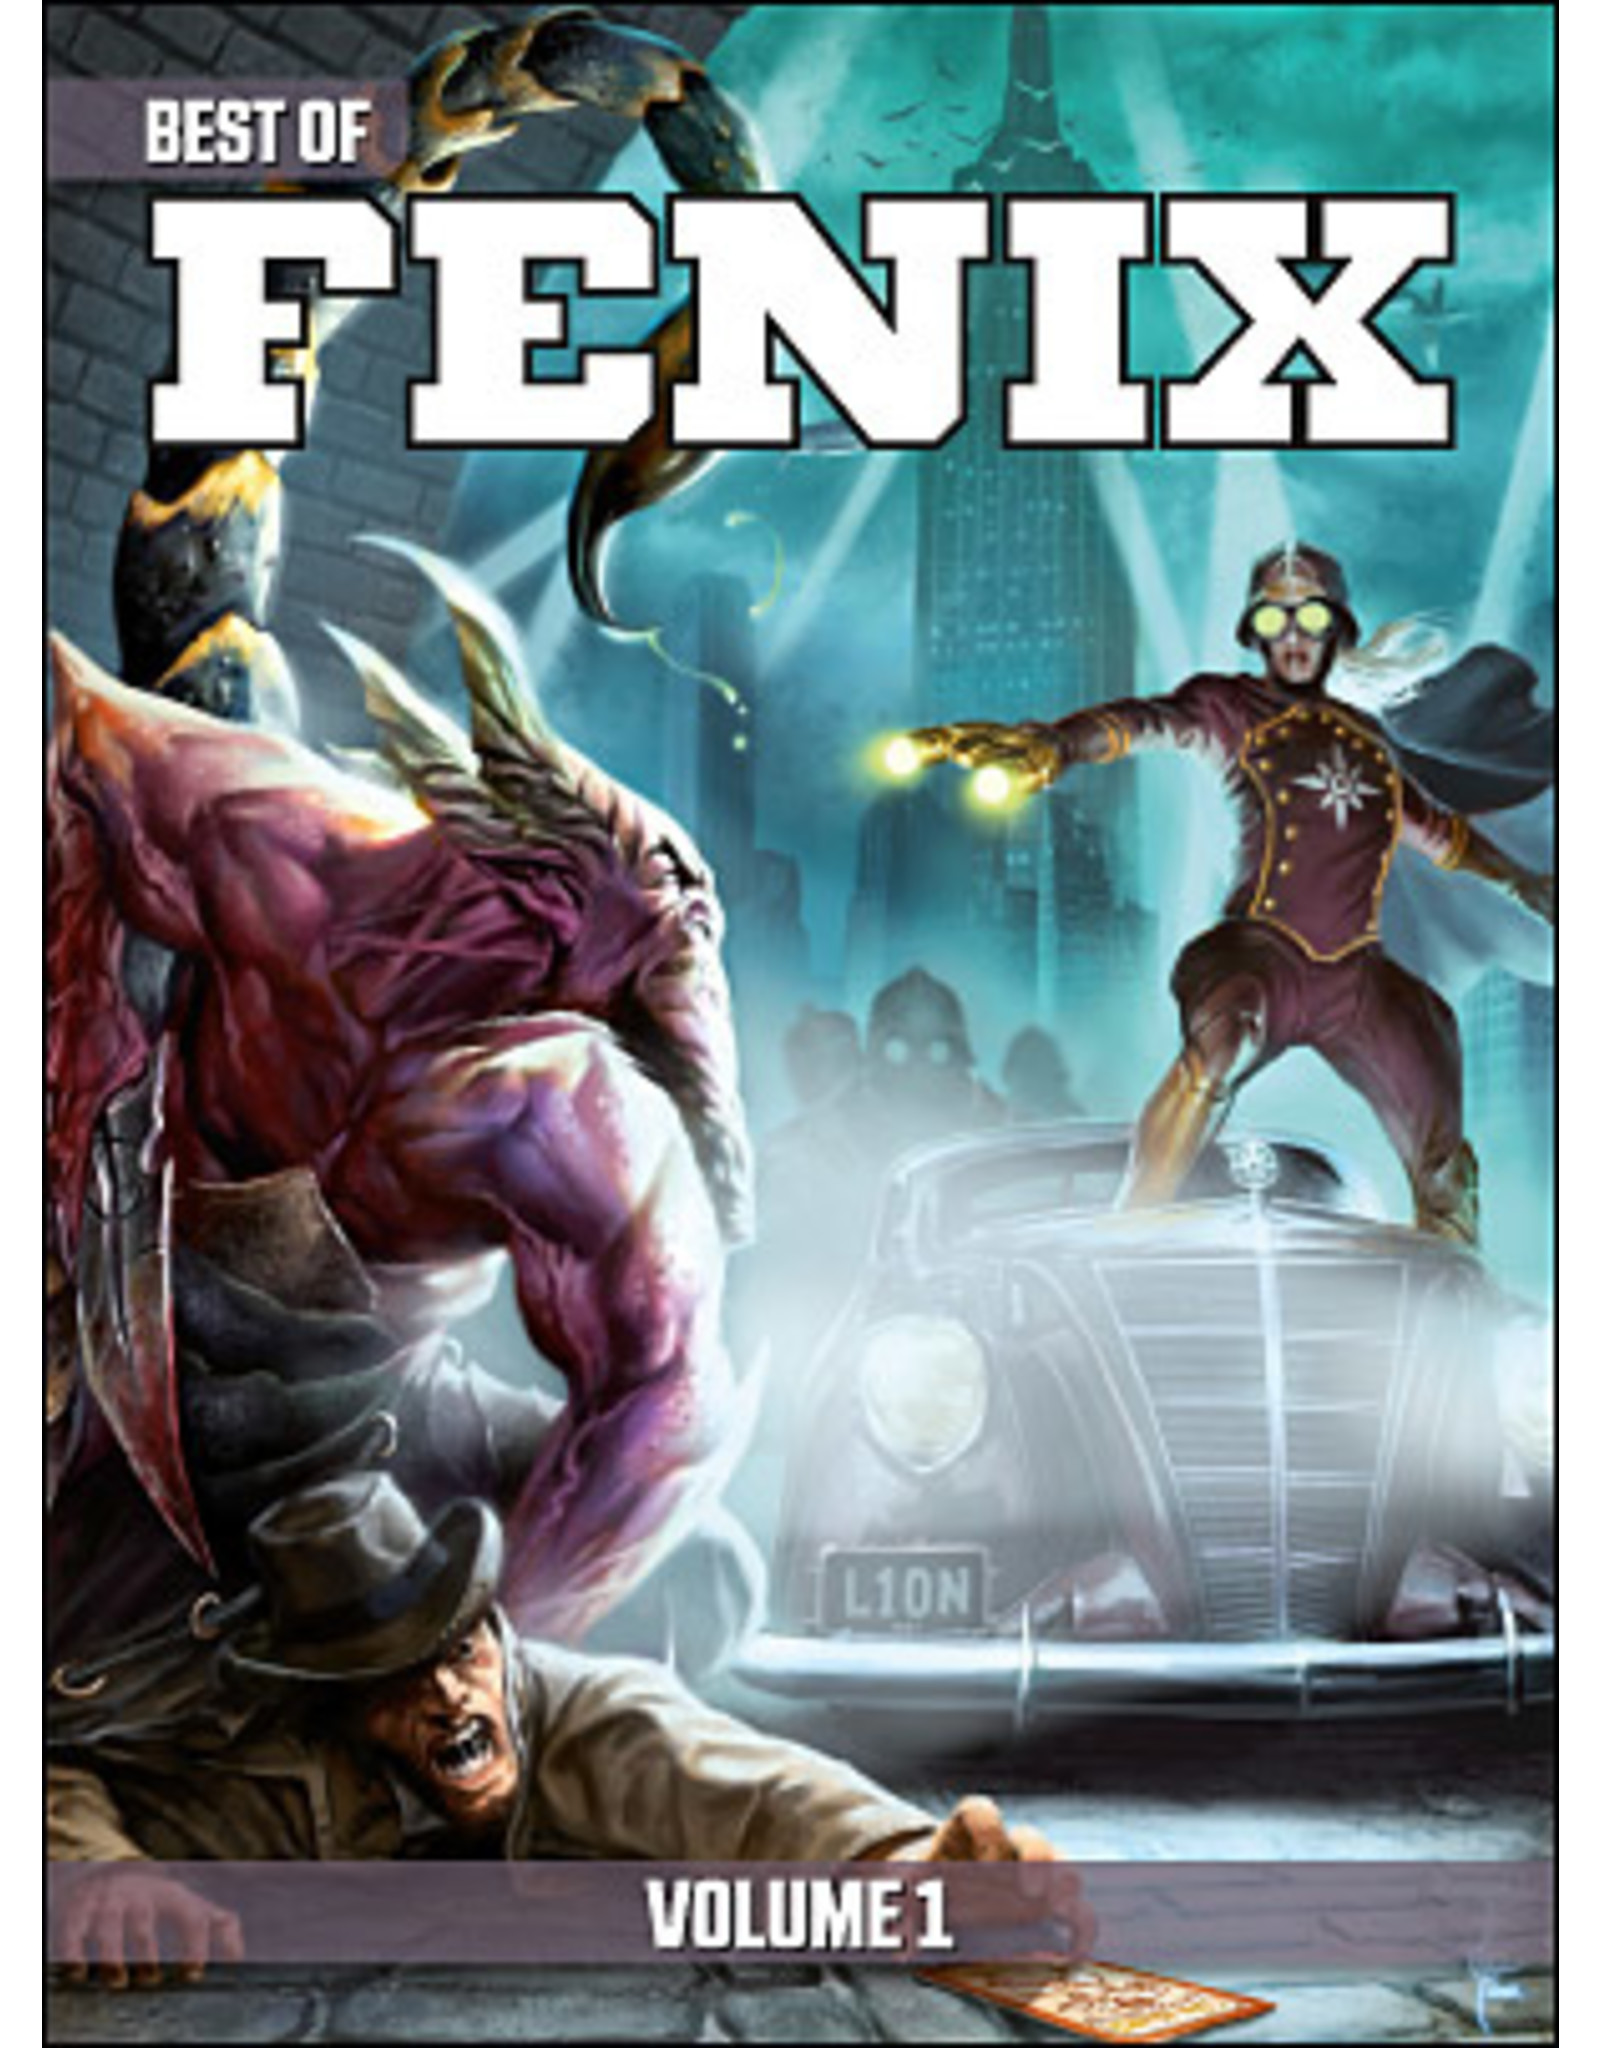 Best of Fenix Volume 1